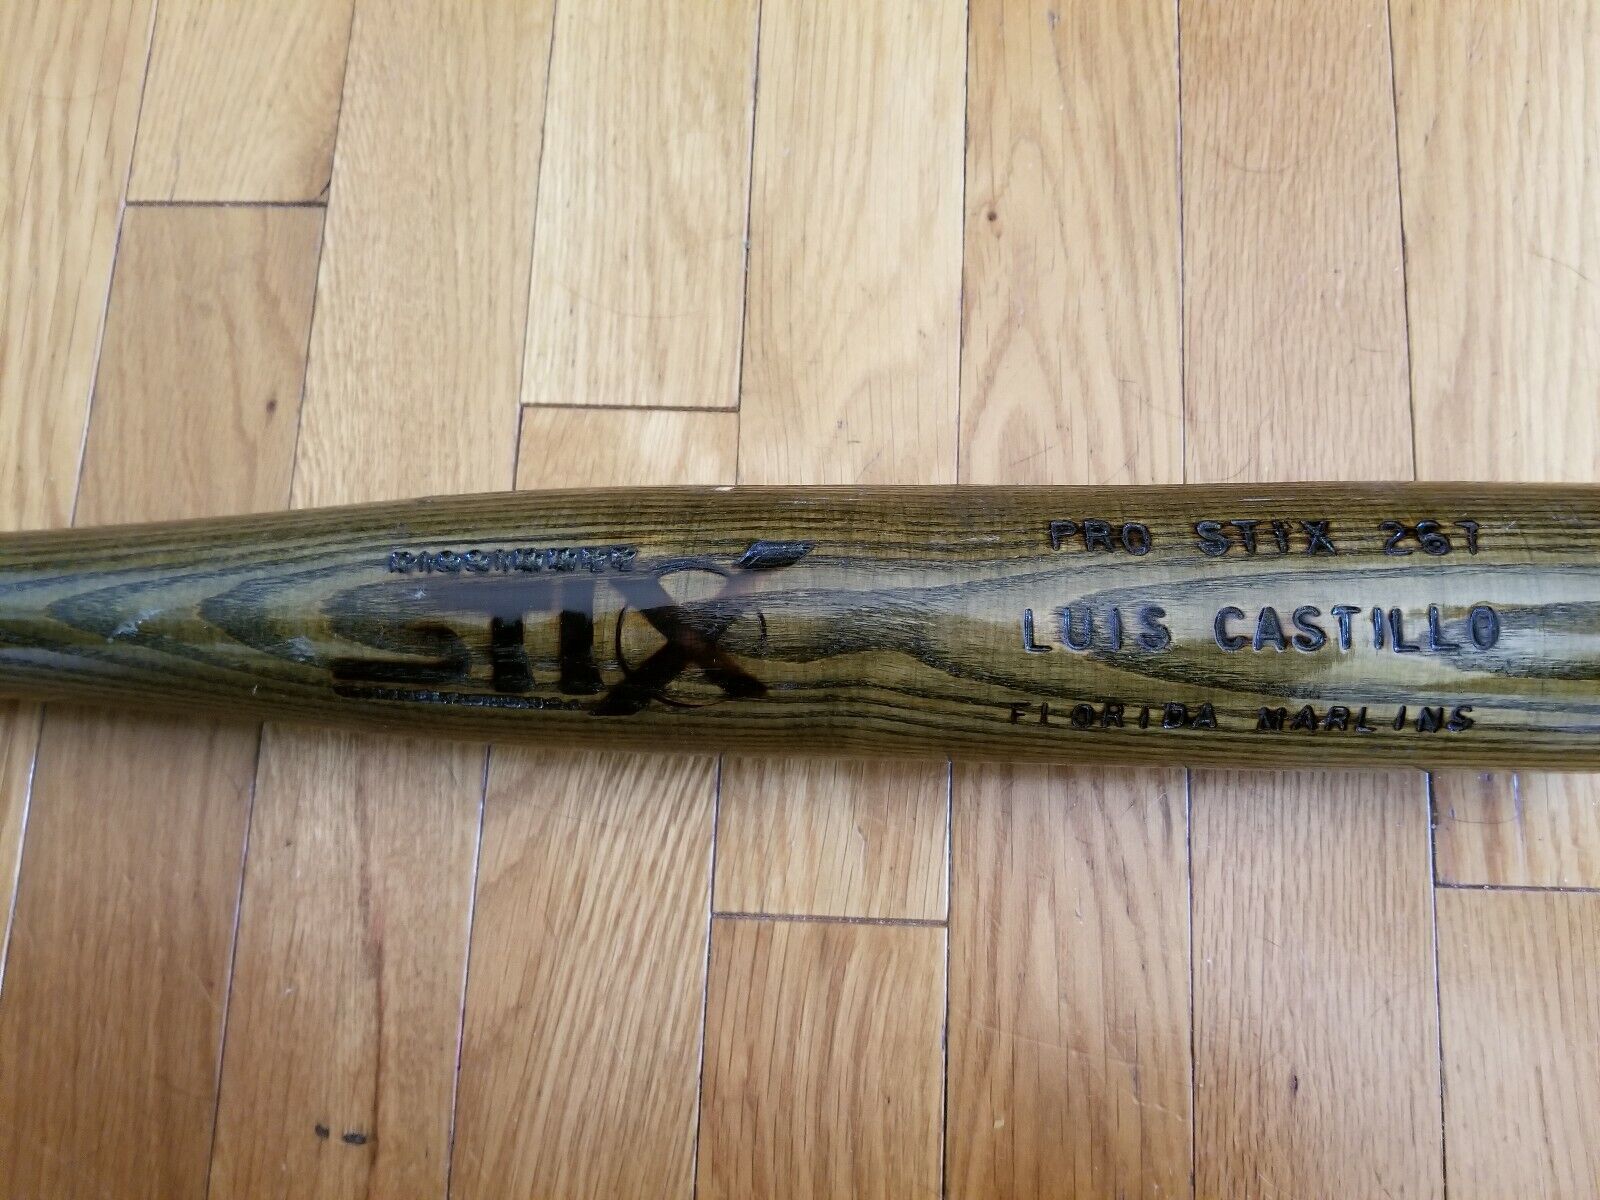 Luis Castillo Florida Marlins Pro Stix 267 Game Used Slight Cracked Baseball Bat